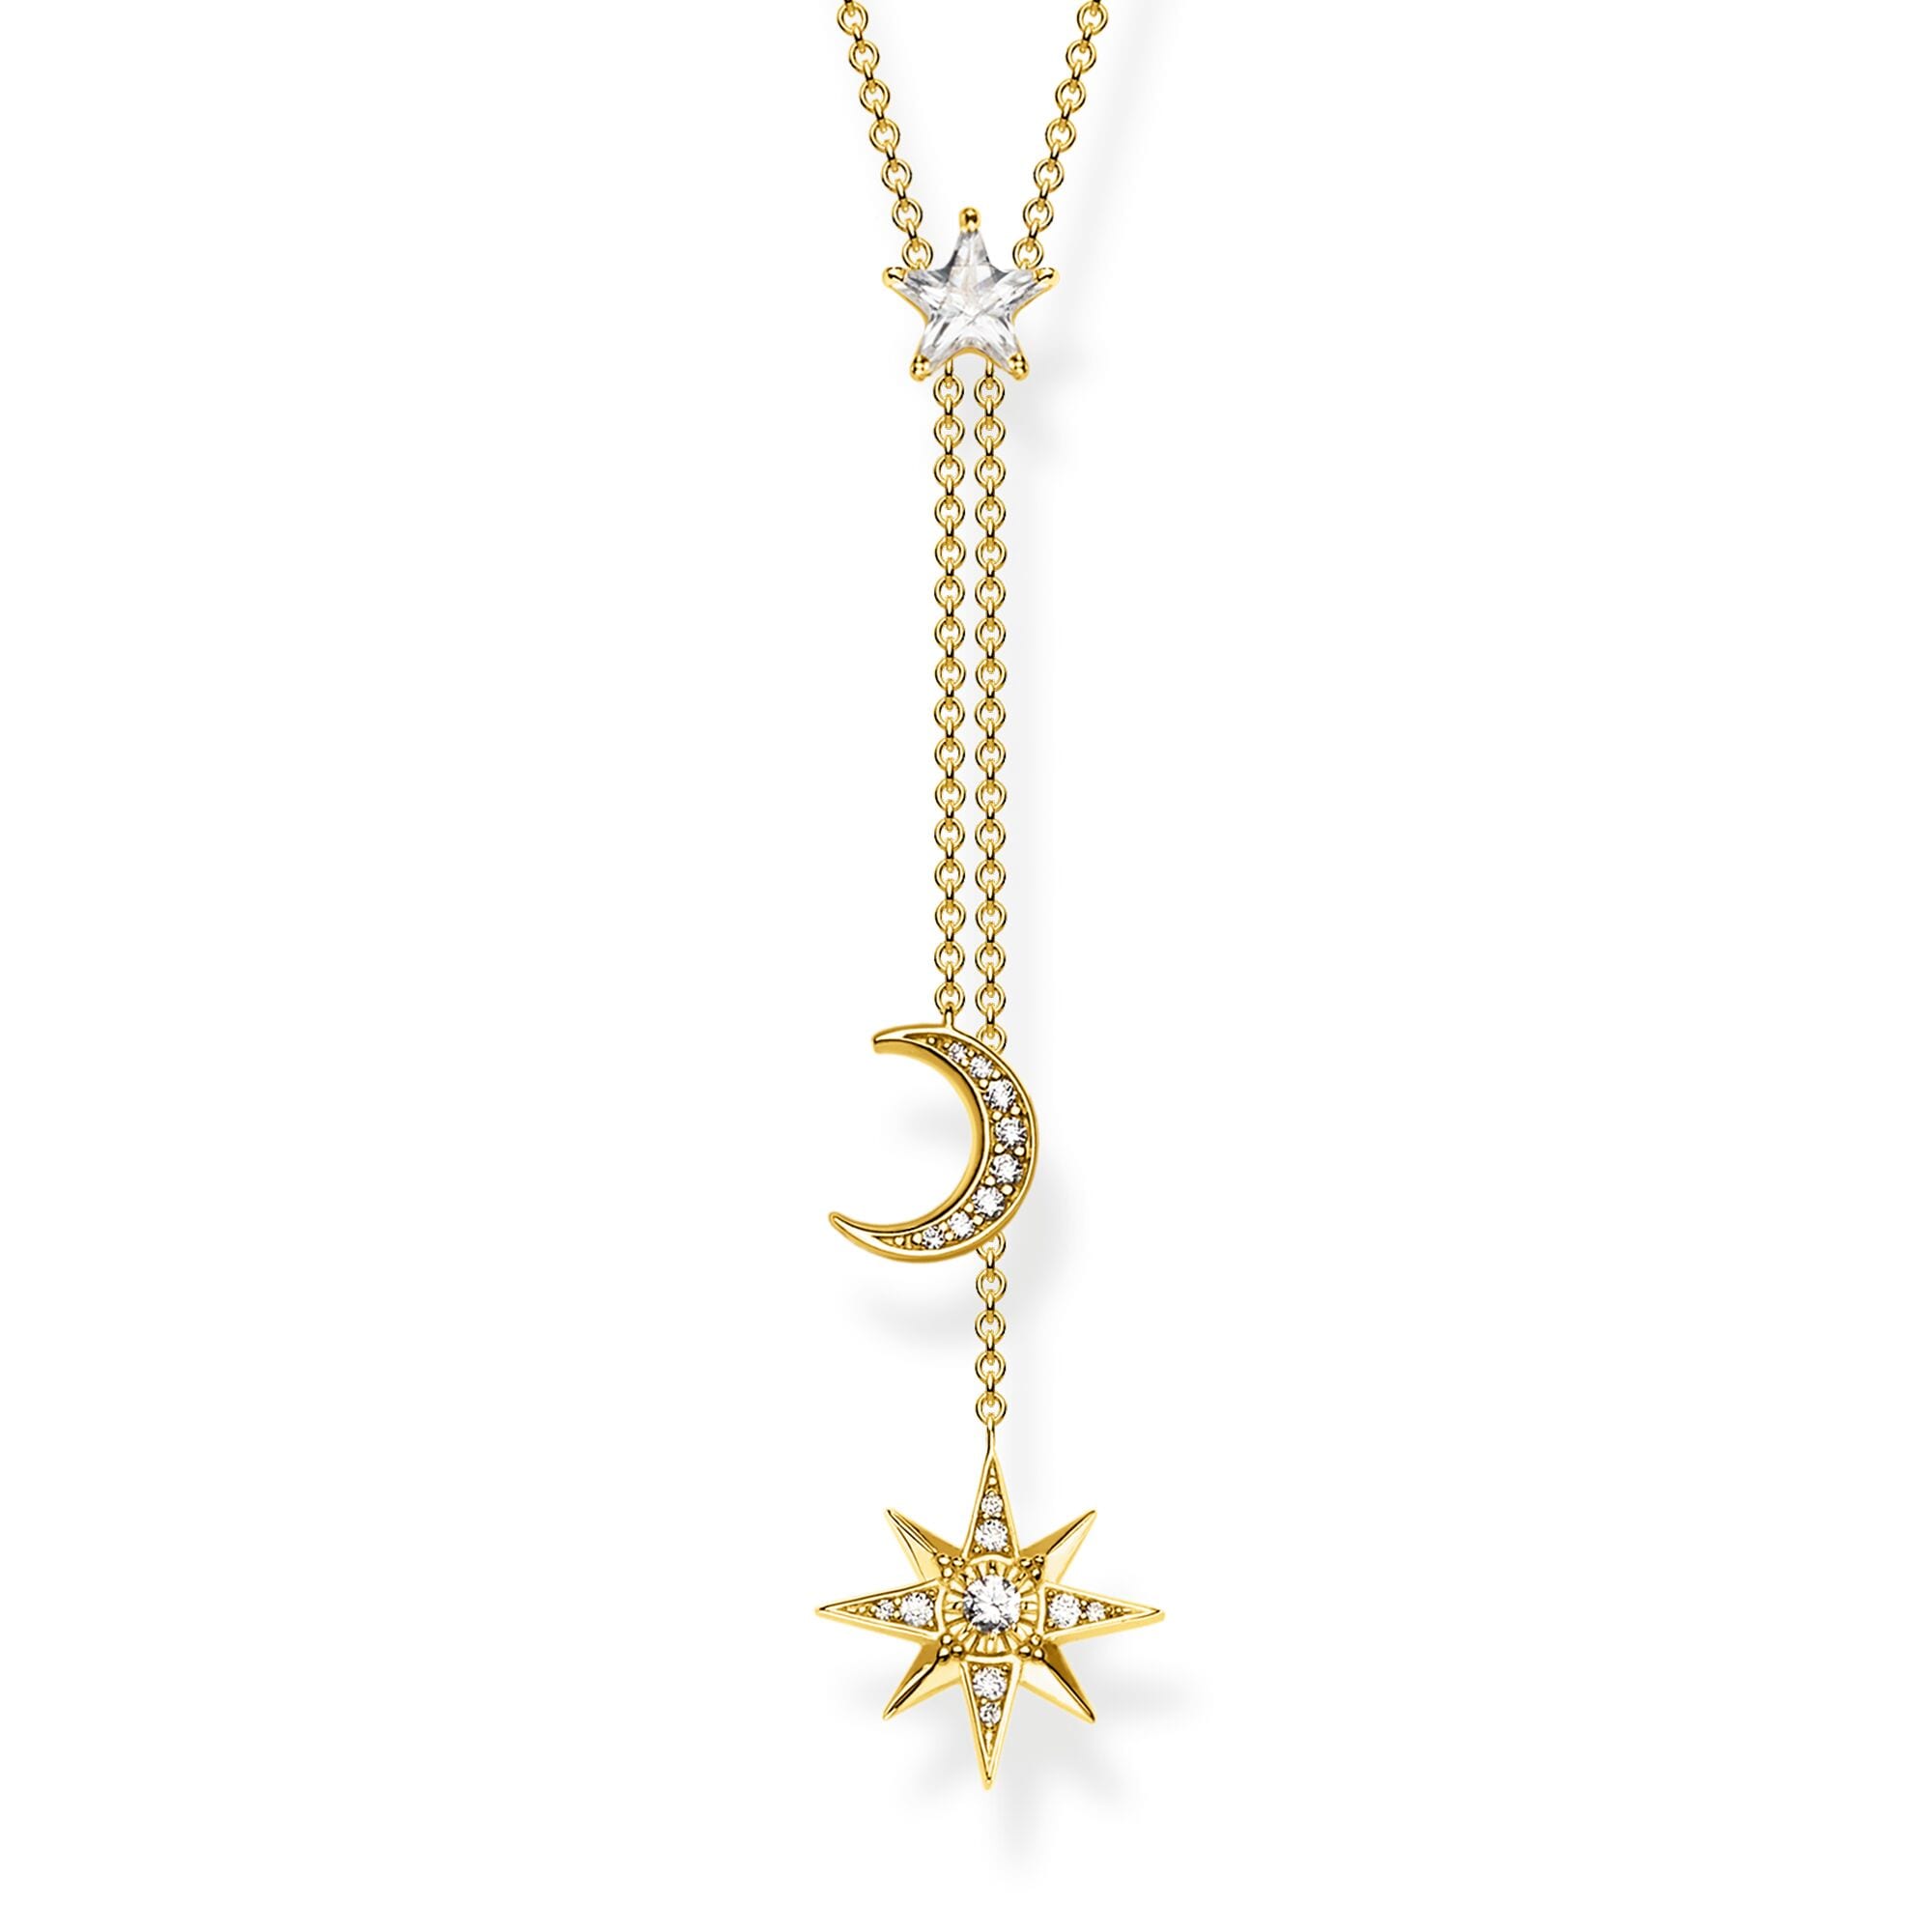 Thomas Sabo Necklace Star & Moon Gold - THOMAS SABO, Thomas Sabo ...